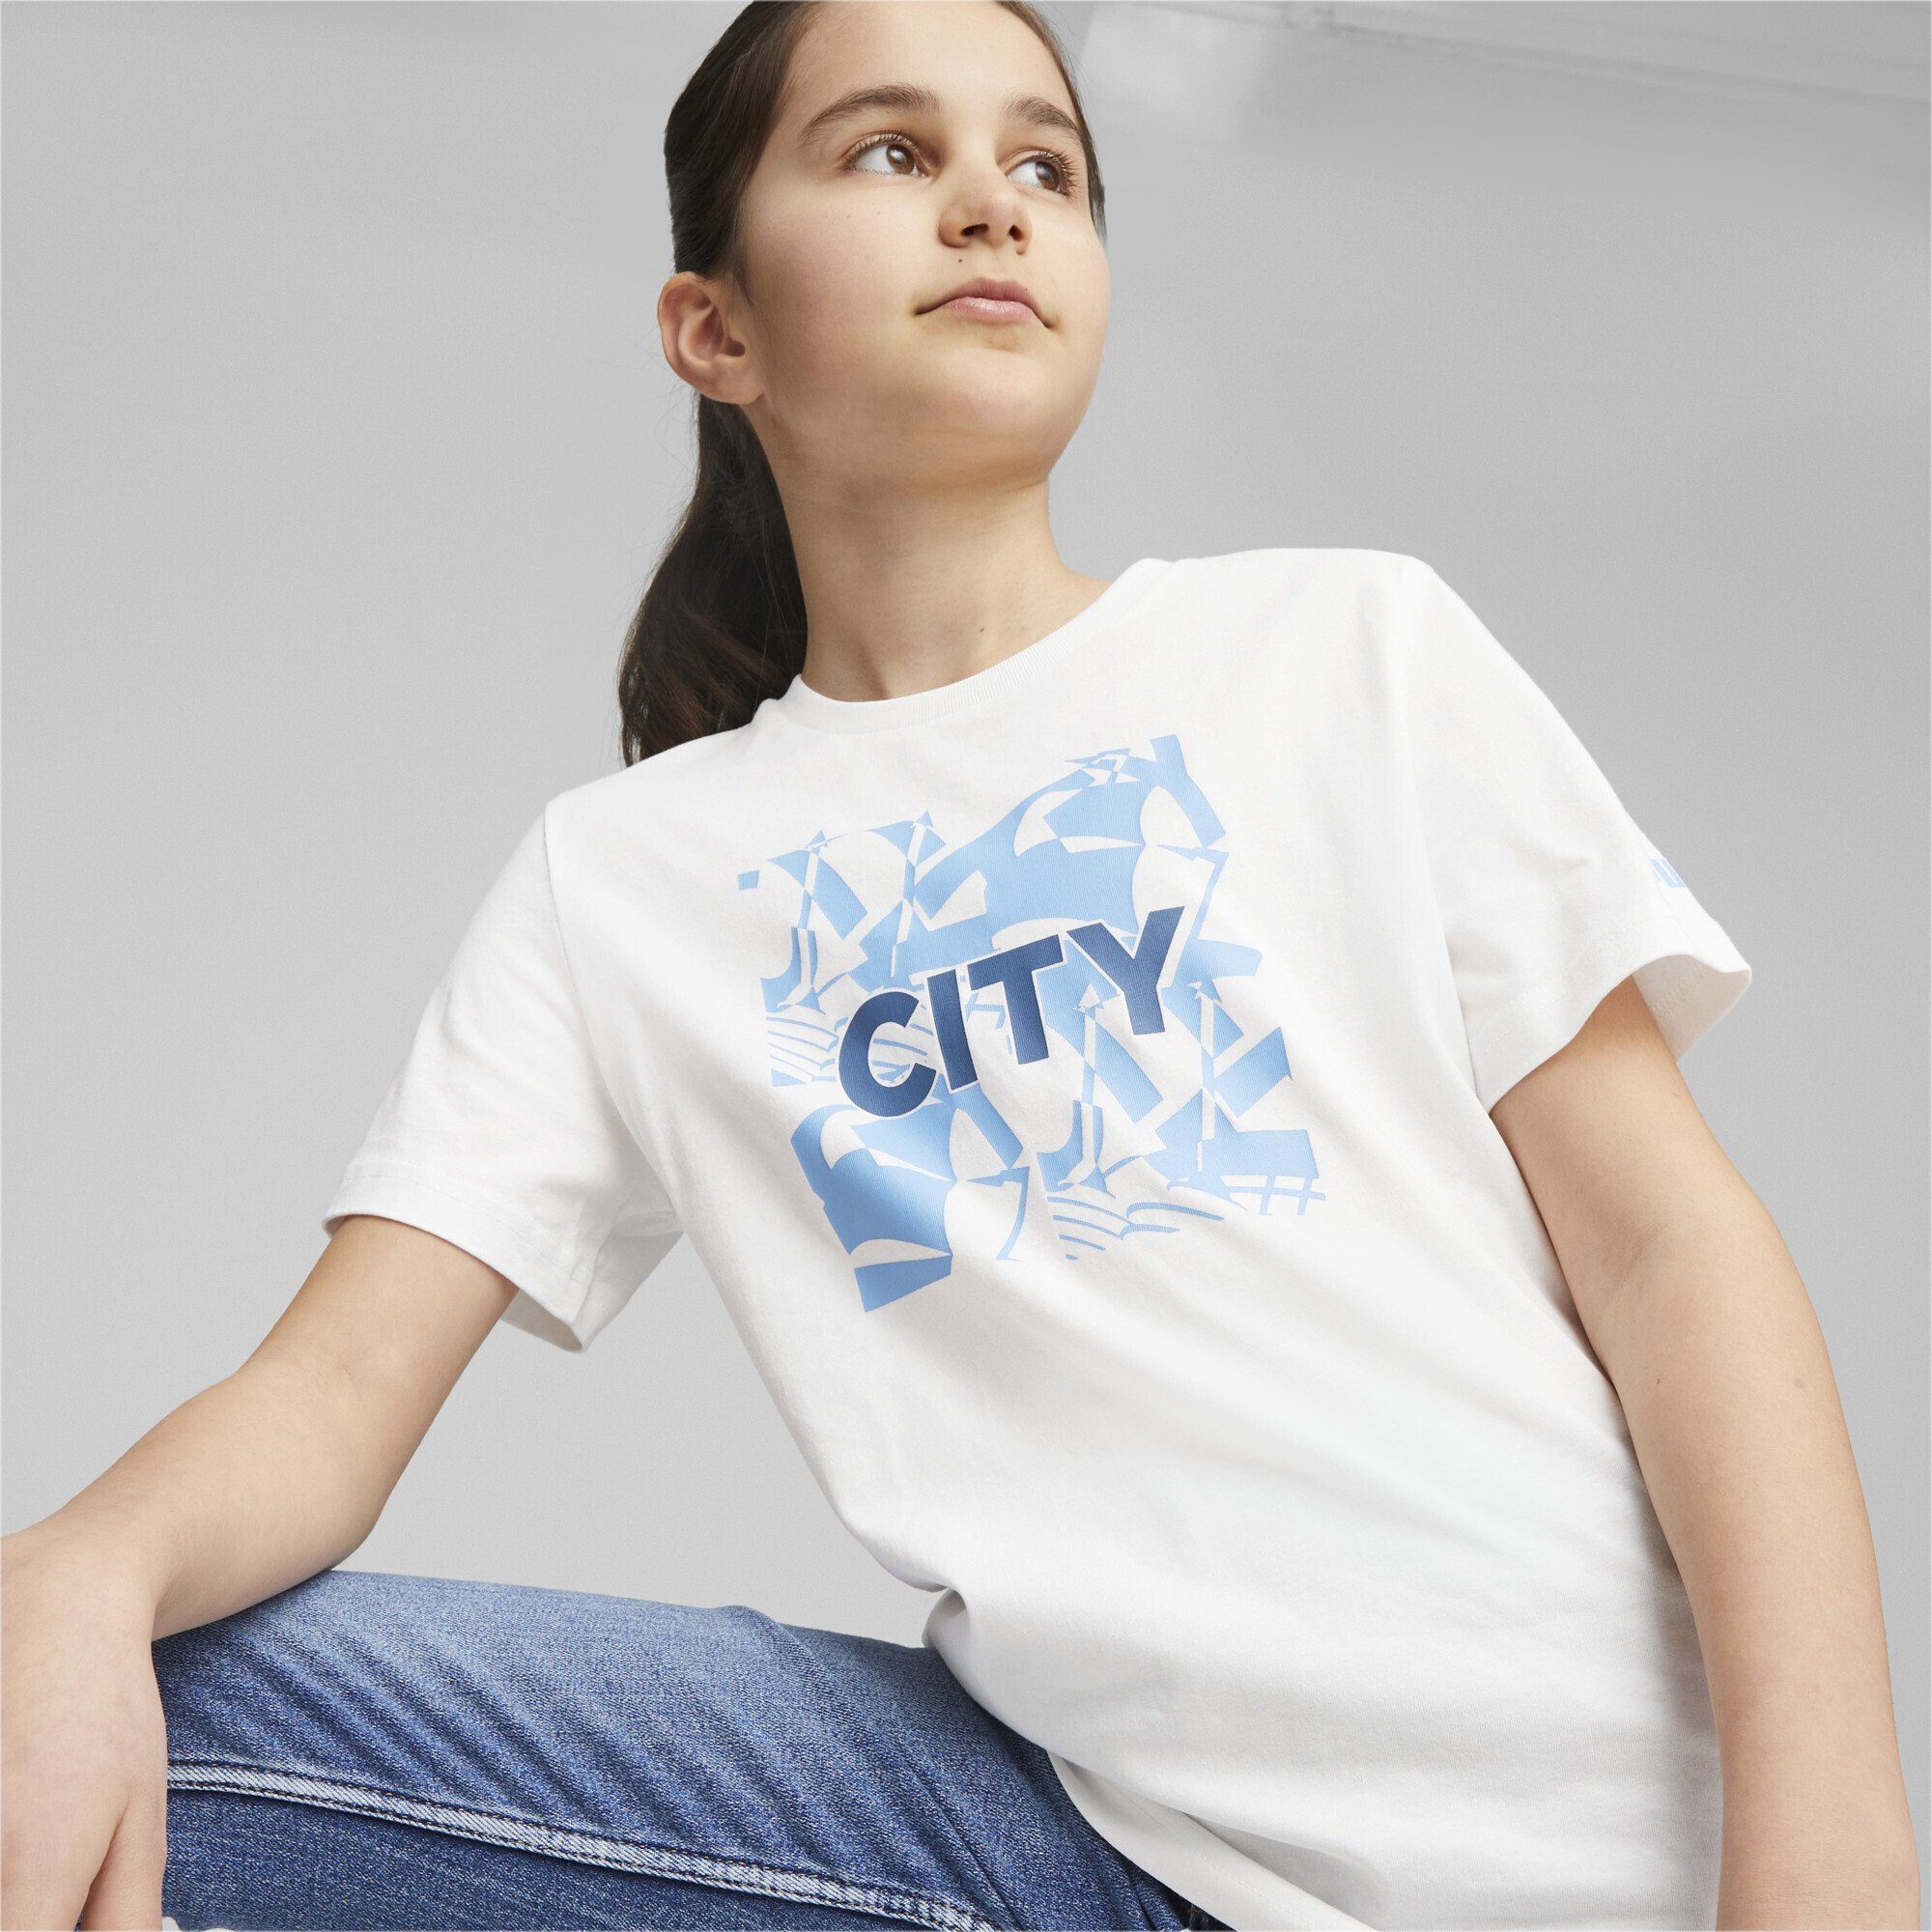 Blue FtblCore Graphic White Jugendliche City T-Shirt PUMA Light T-Shirt Team Manchester